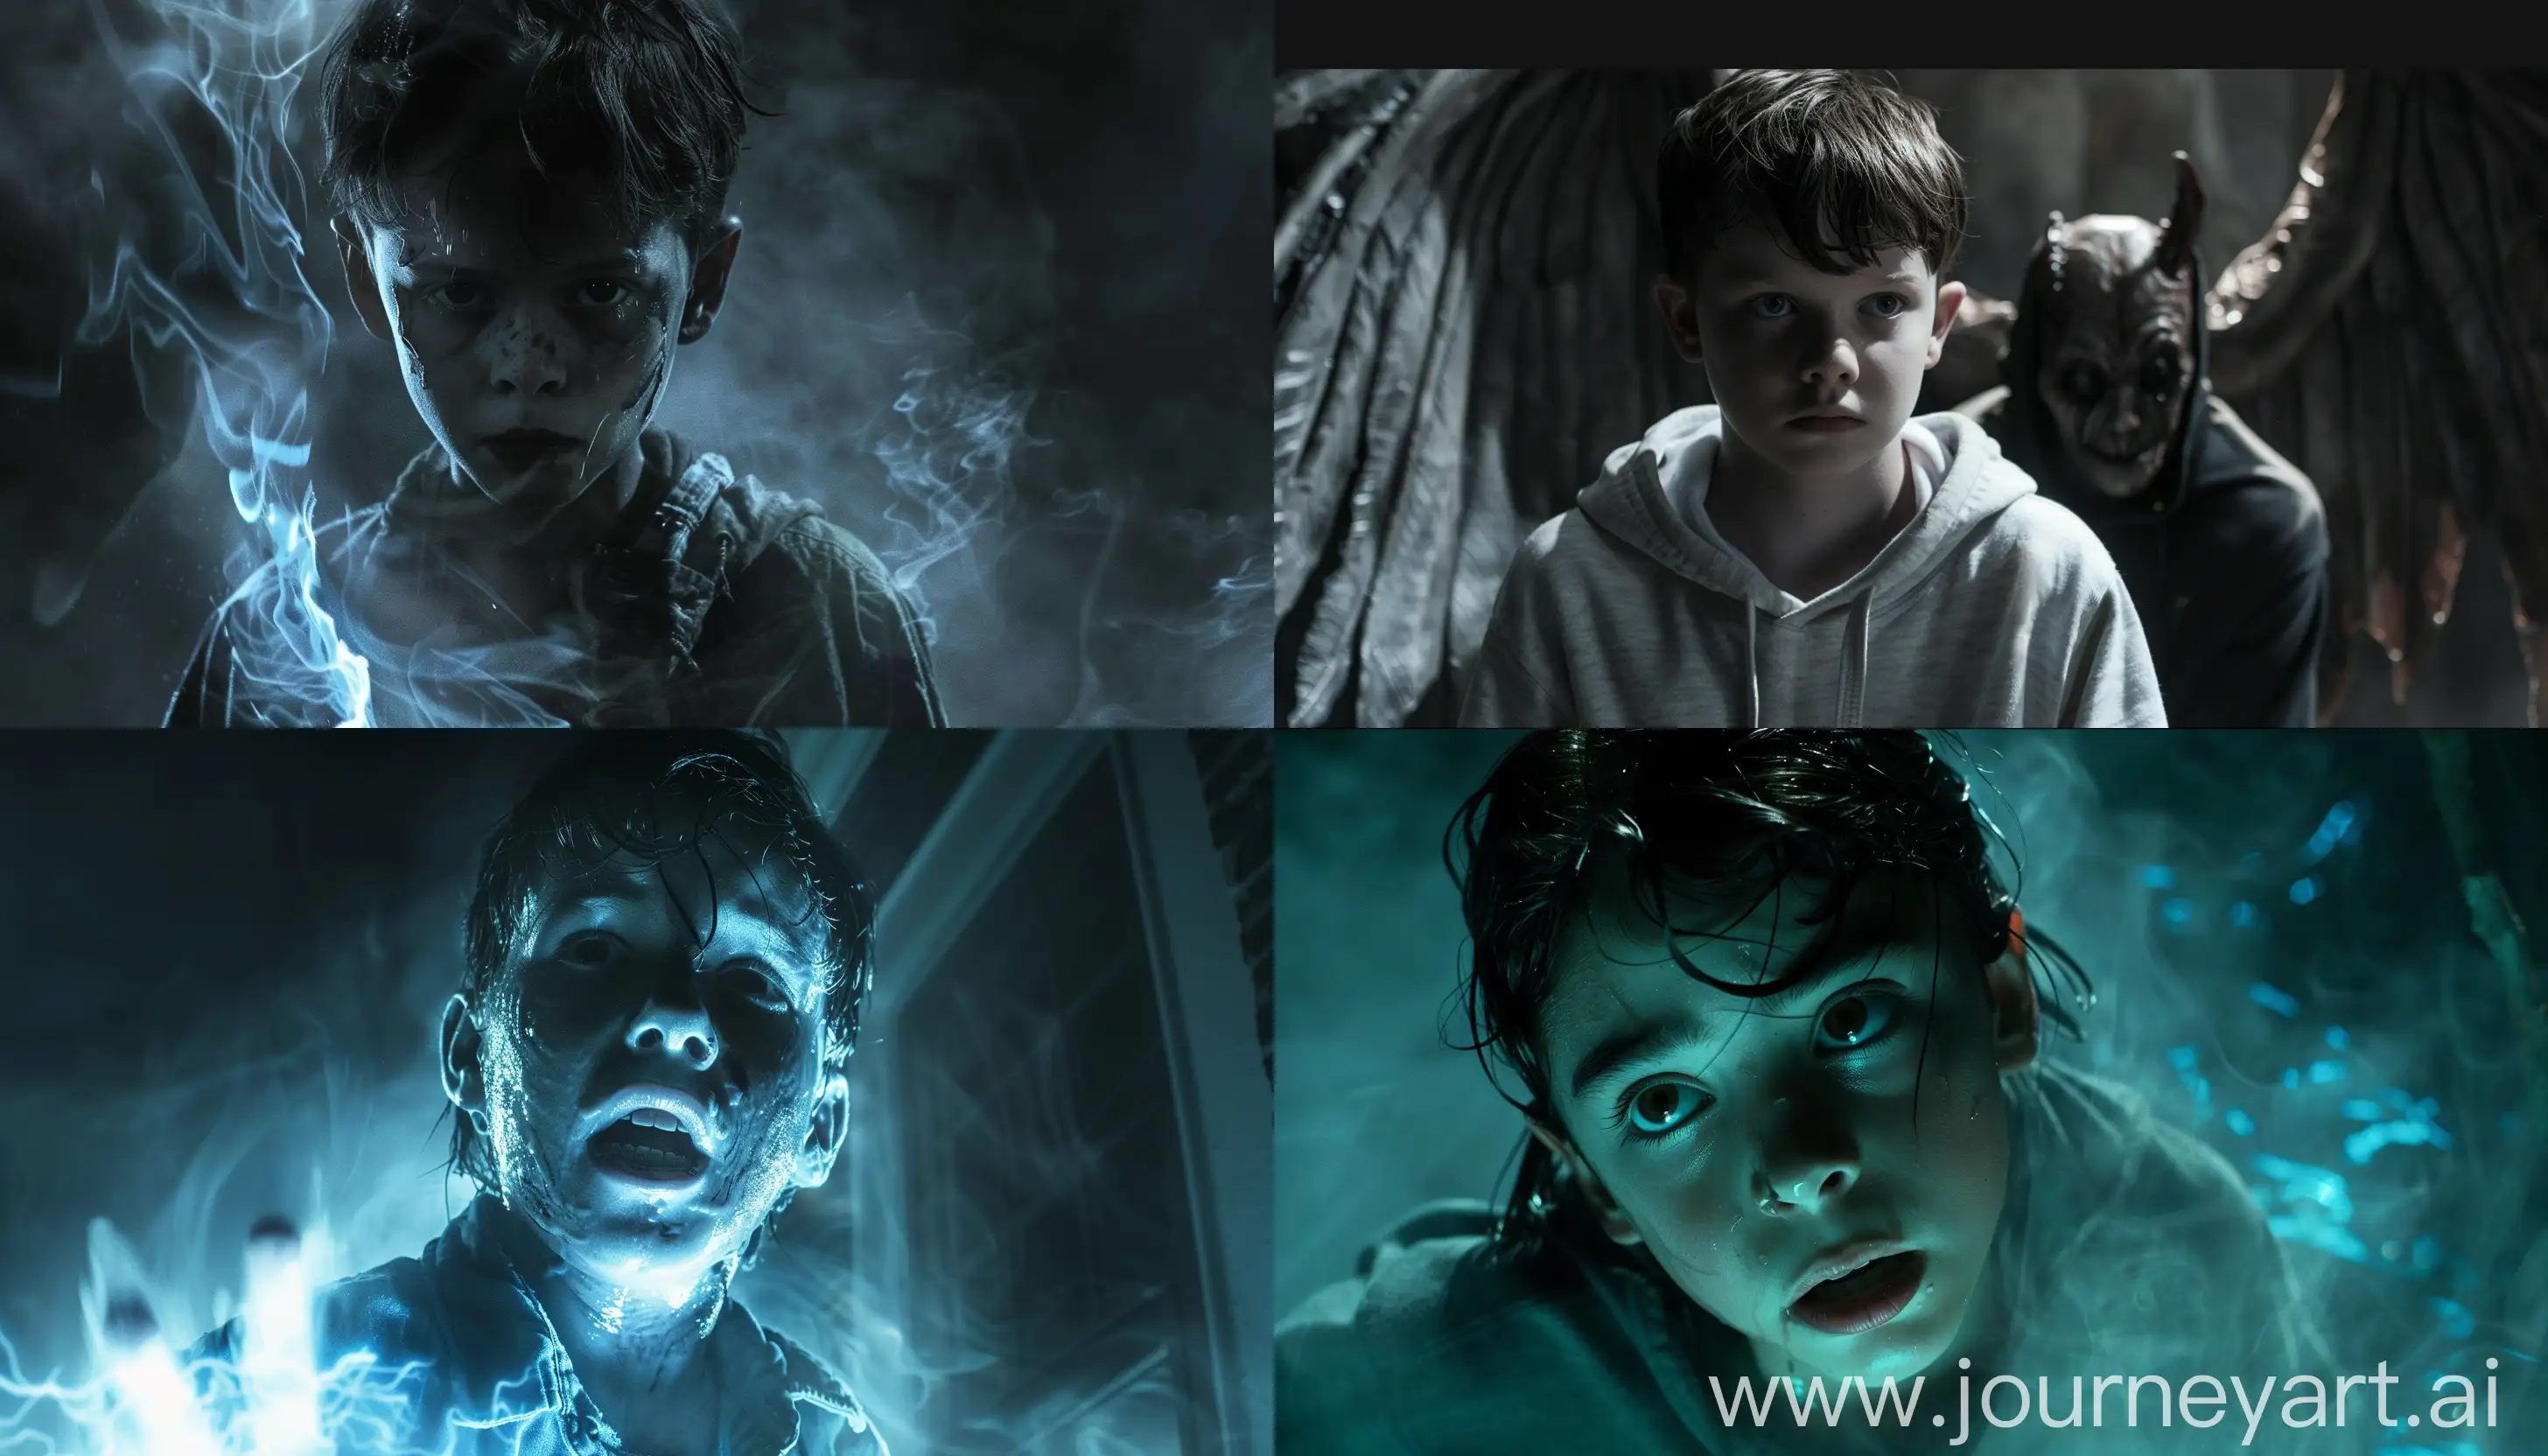 Teenage-Supernatural-Power-Unleashed-in-Horror-Scene